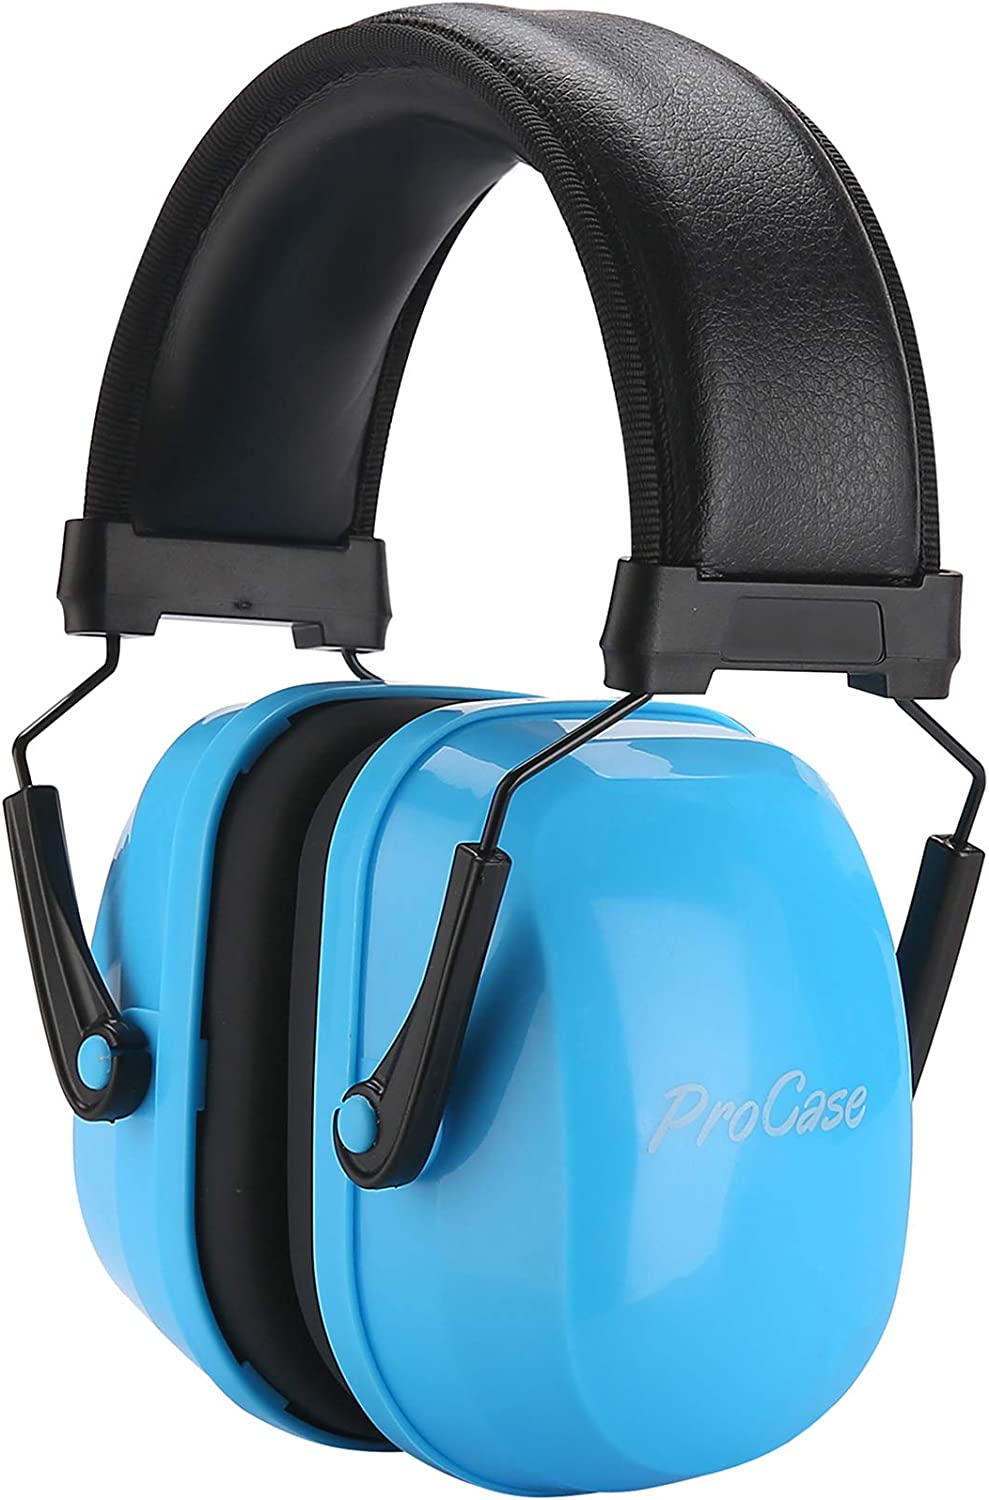 ProCase Kids Ear Protection, 25dB Noise Reduction Earmuffs for Children Toddler Autism Sound Proof Noise Cancelling Austistic Headphones for Concert -Blue